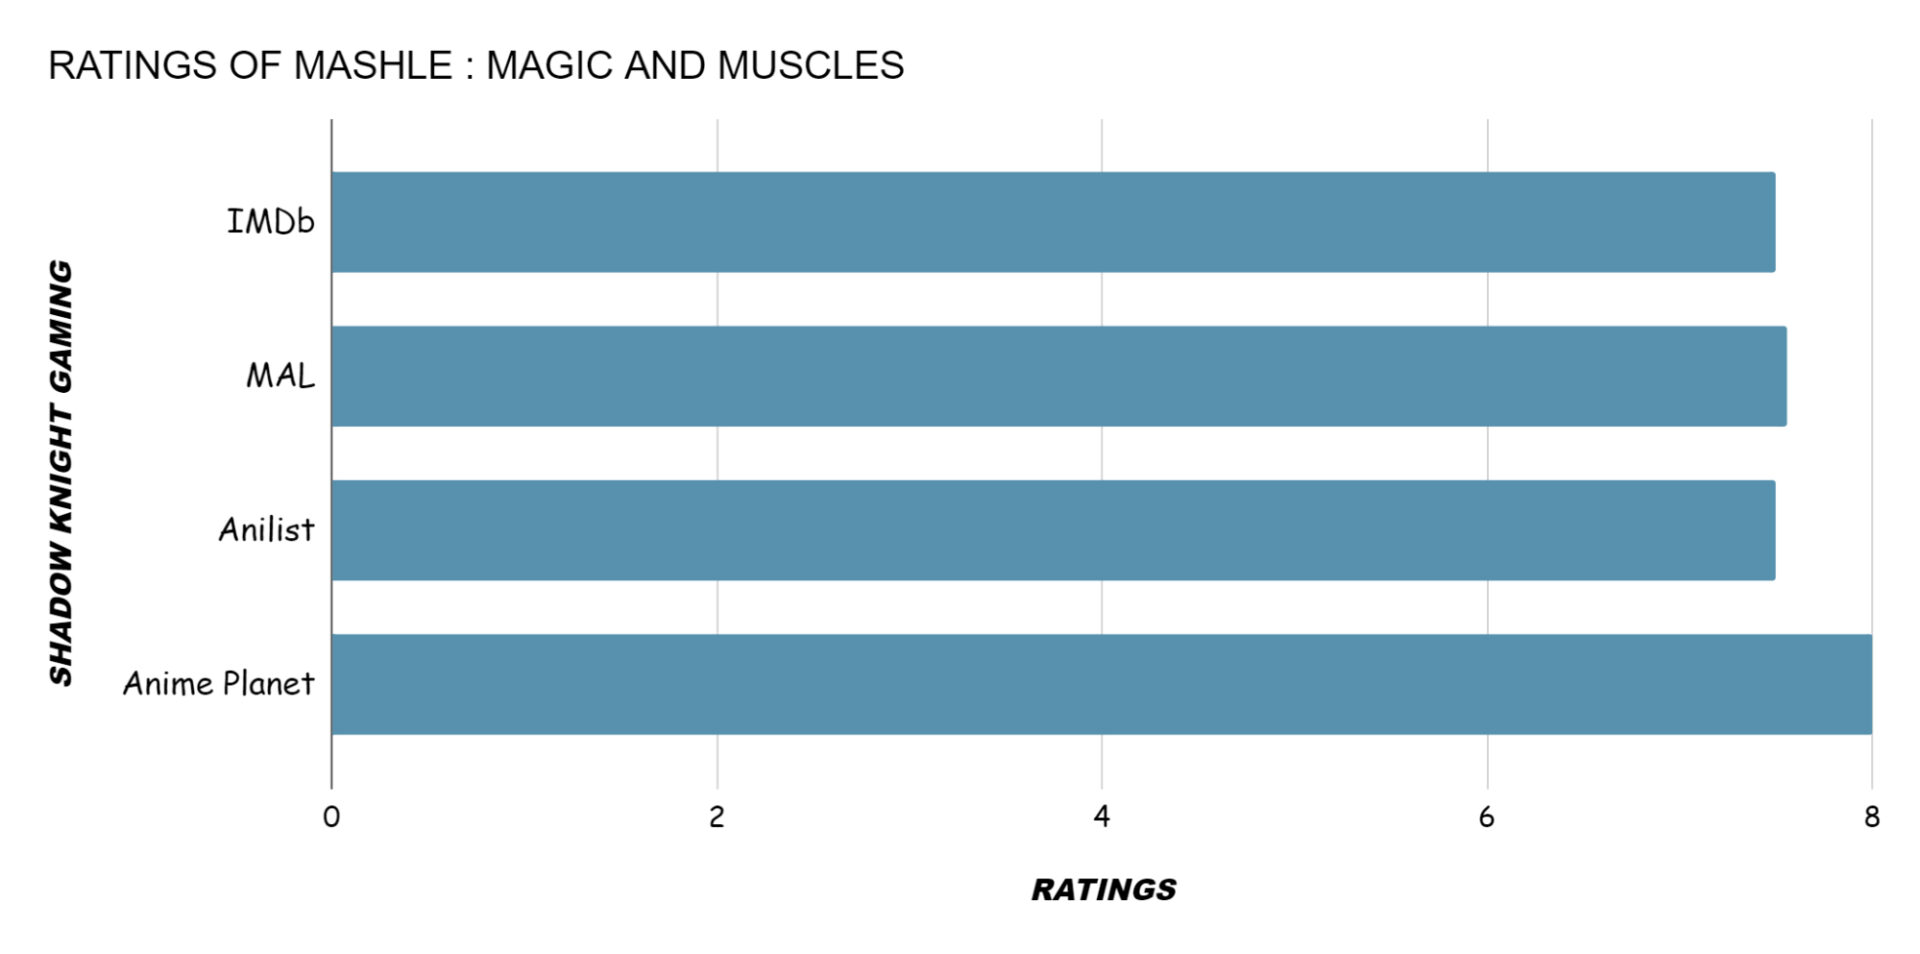 Mashle: Magic and Muscles Season 1 user ratings on IMDb, MyAnimeList, Anilist, Anime Planet